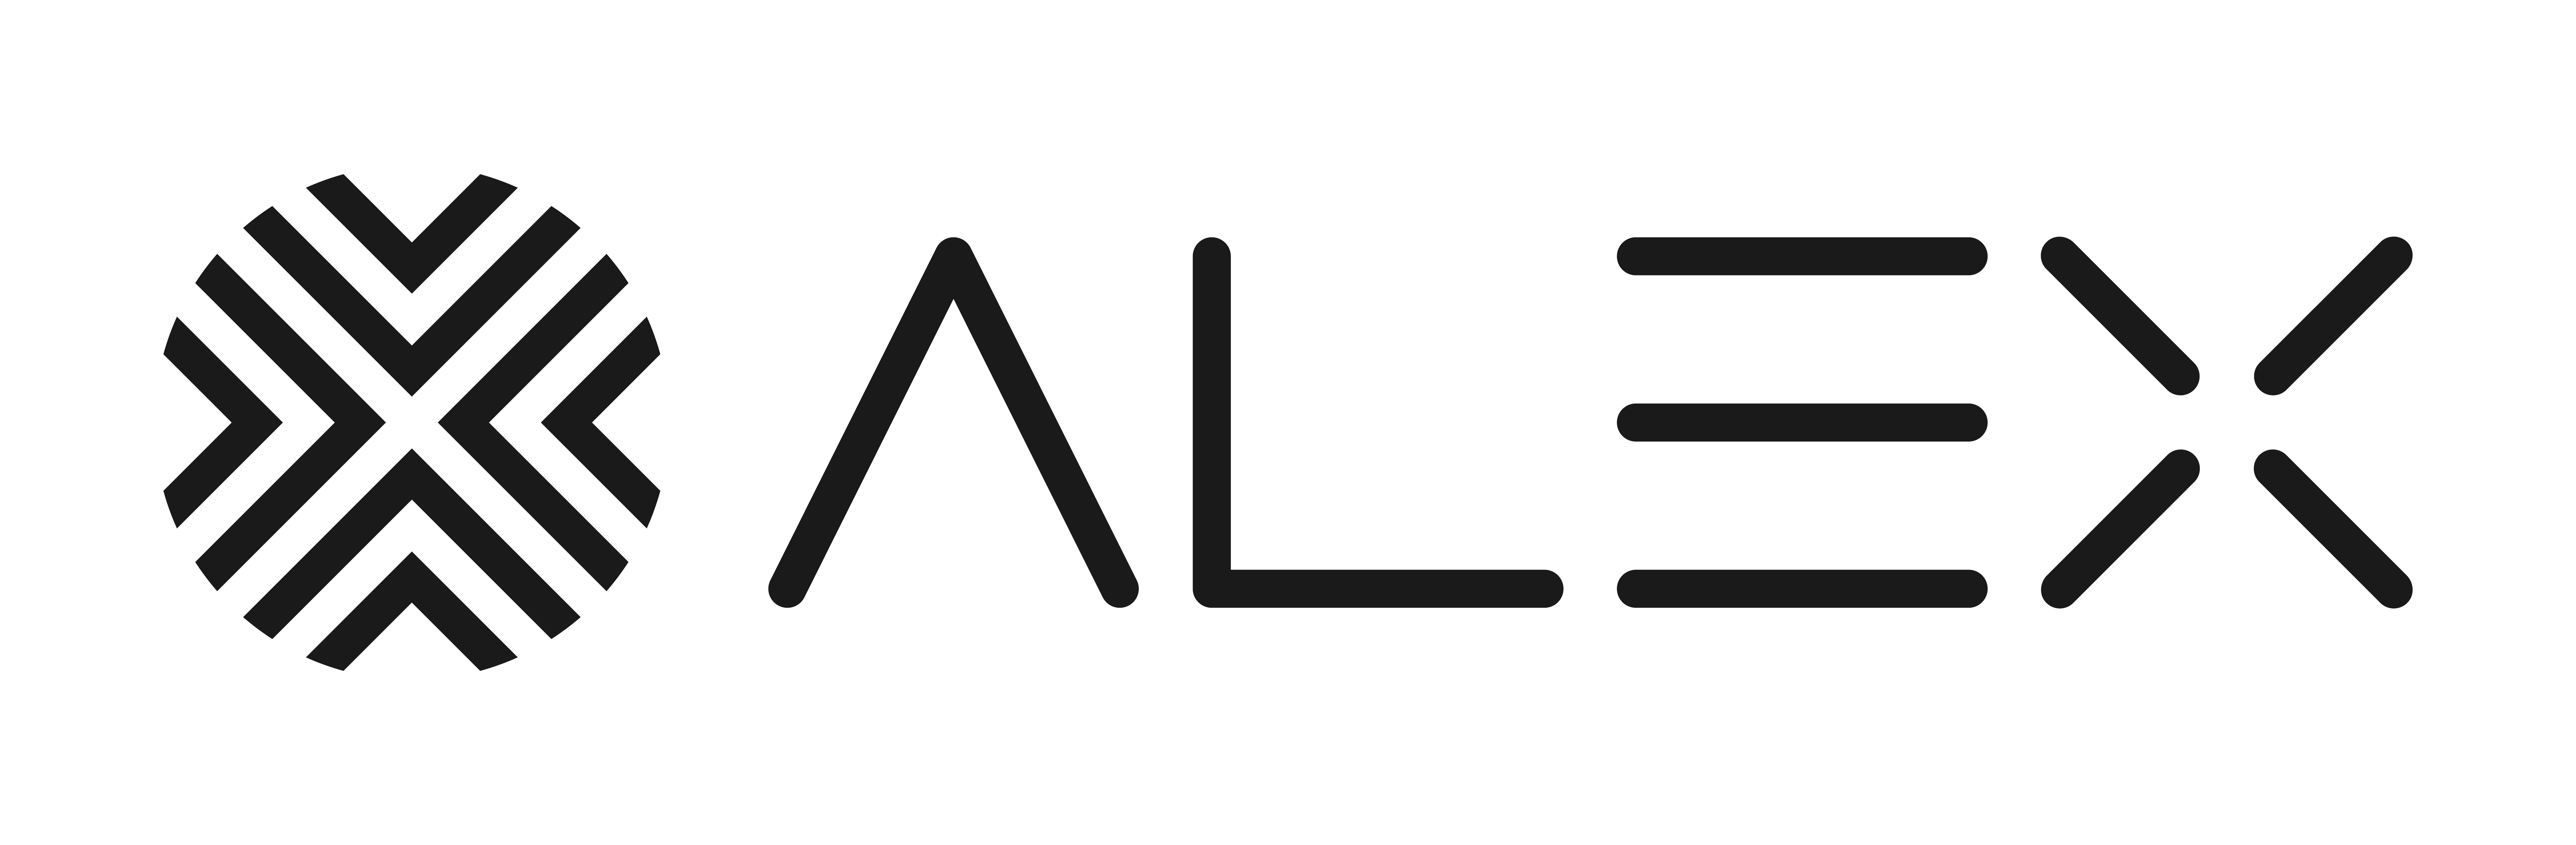 ALEX Logo.png